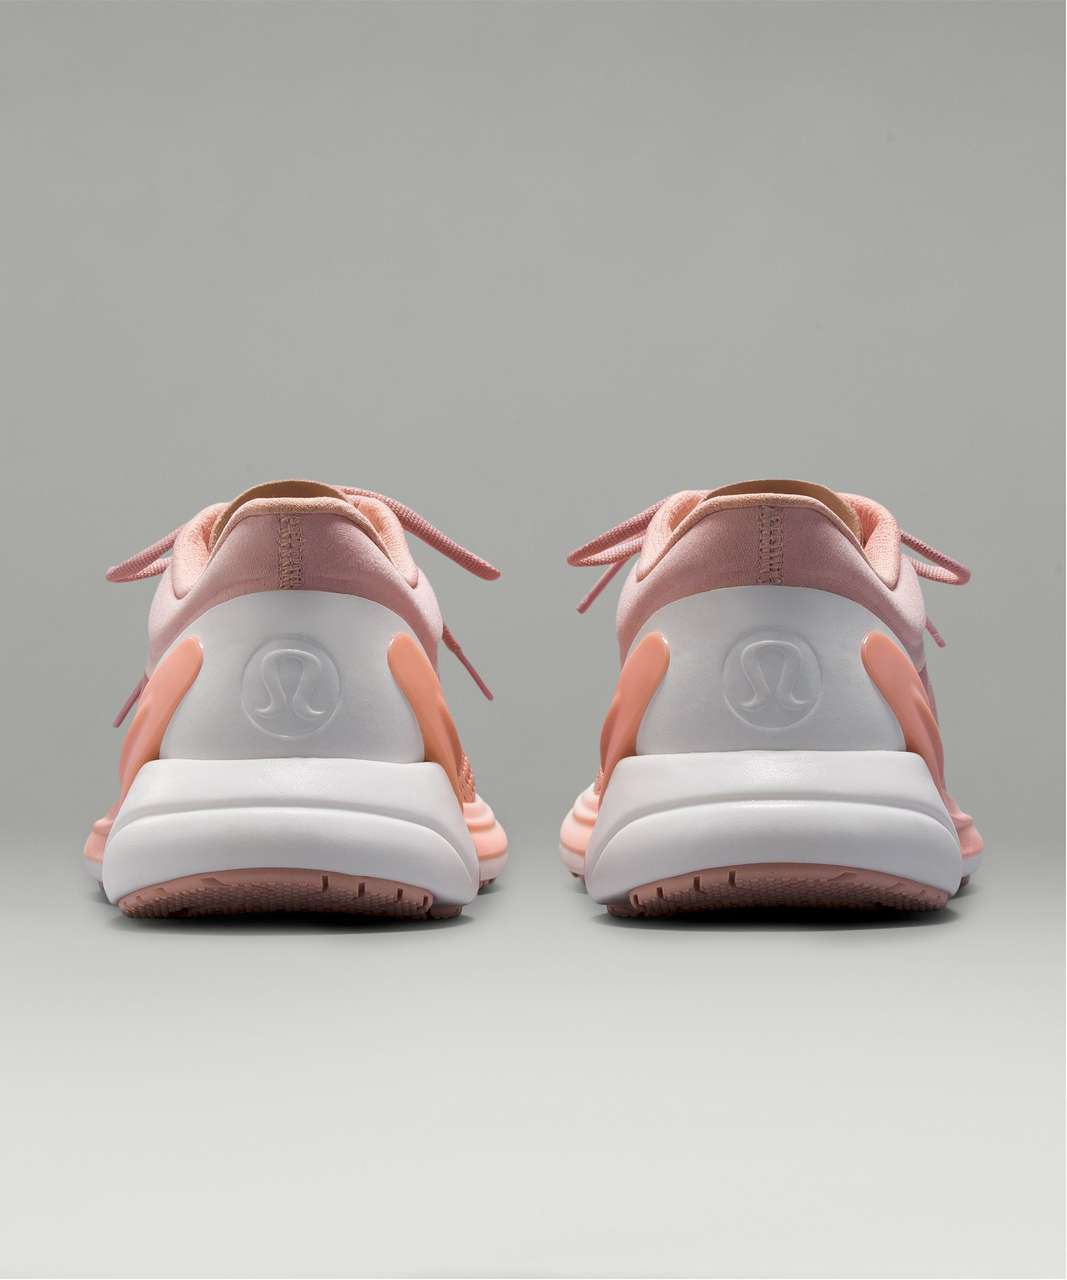 lululemon athletica, Shoes, Lululemon Blissfeel Running Sneakers Size 9  Shoes Mink Berry Pink Parfait Vapor